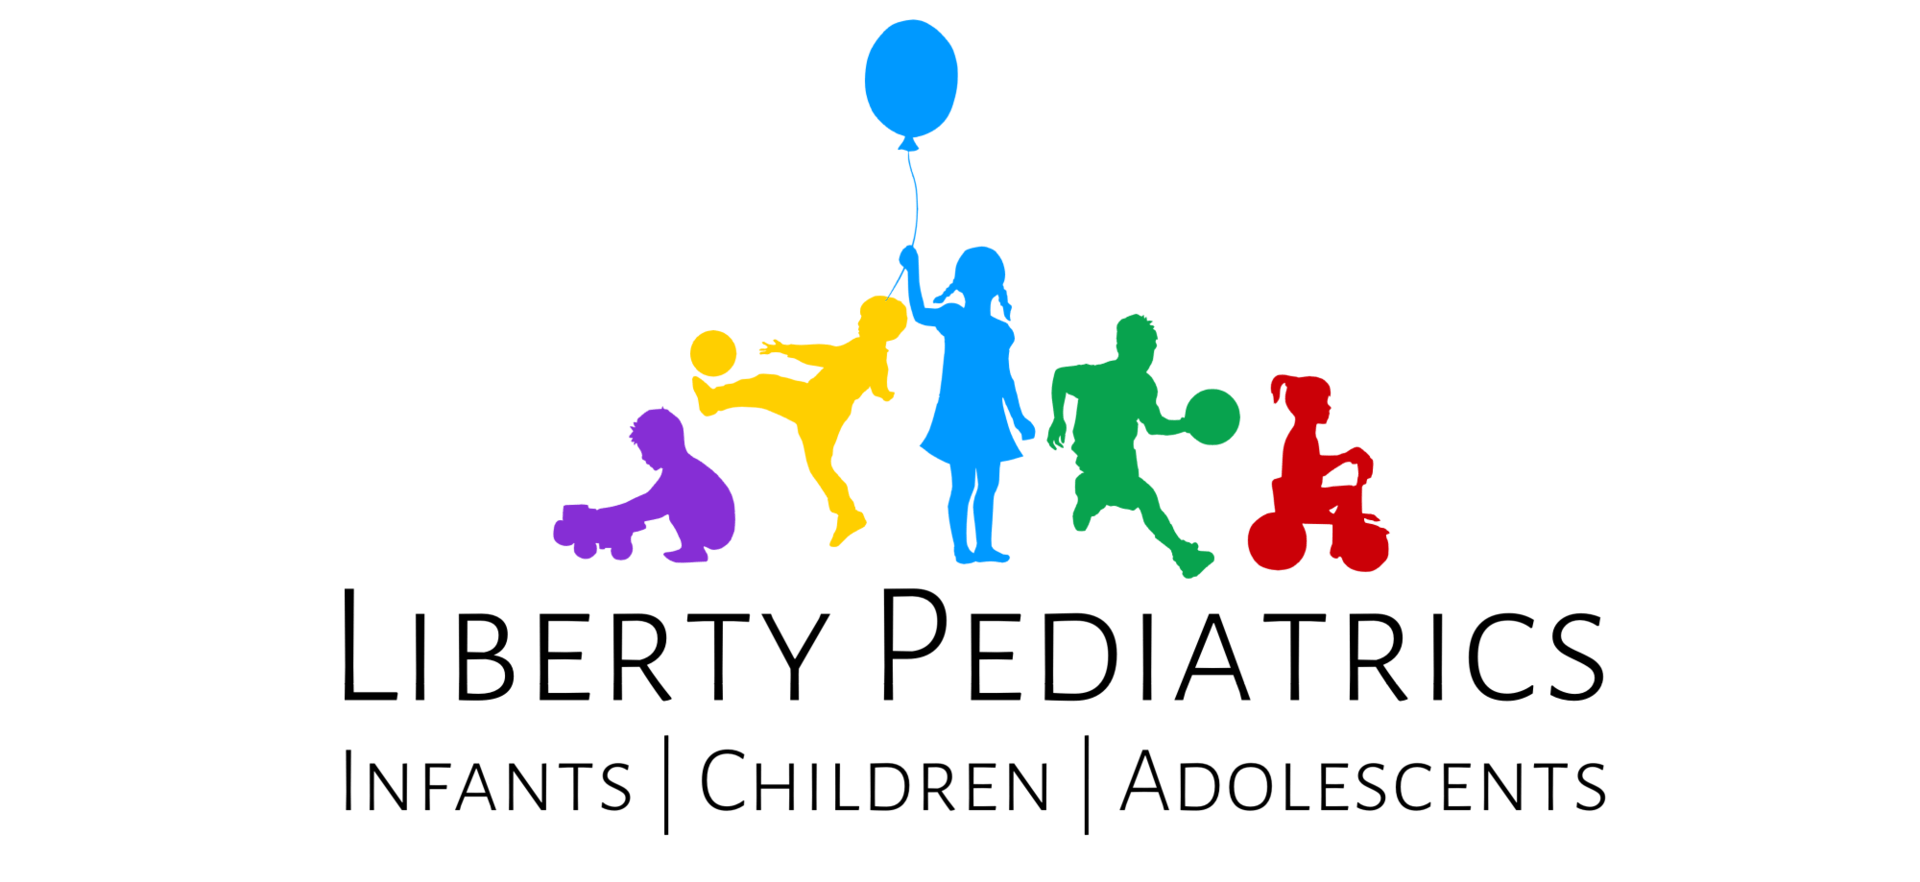 Pediatrics Logo - Pediatric Medical Care | Liberty Pediatrics | Liberty Park, Alabama